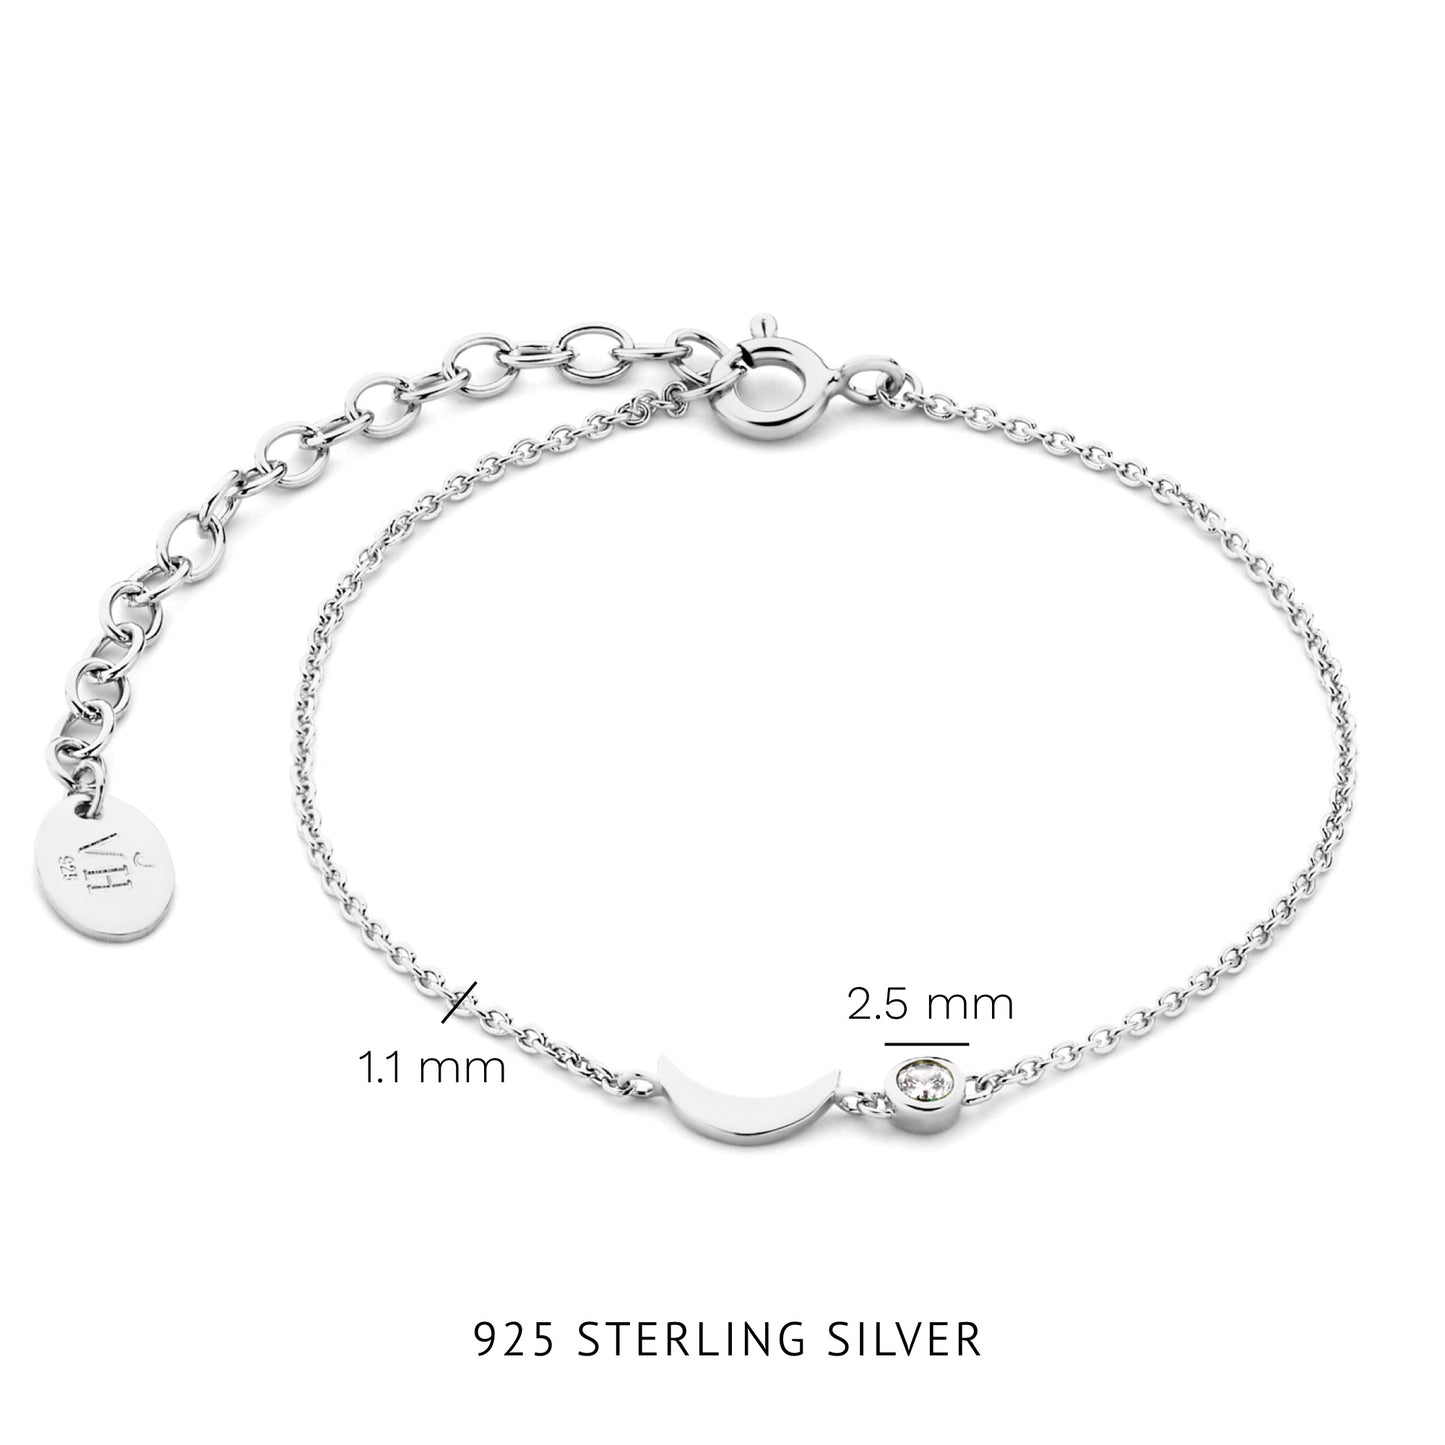 Luna 925 sterling silver bracelet with white zirconia stone